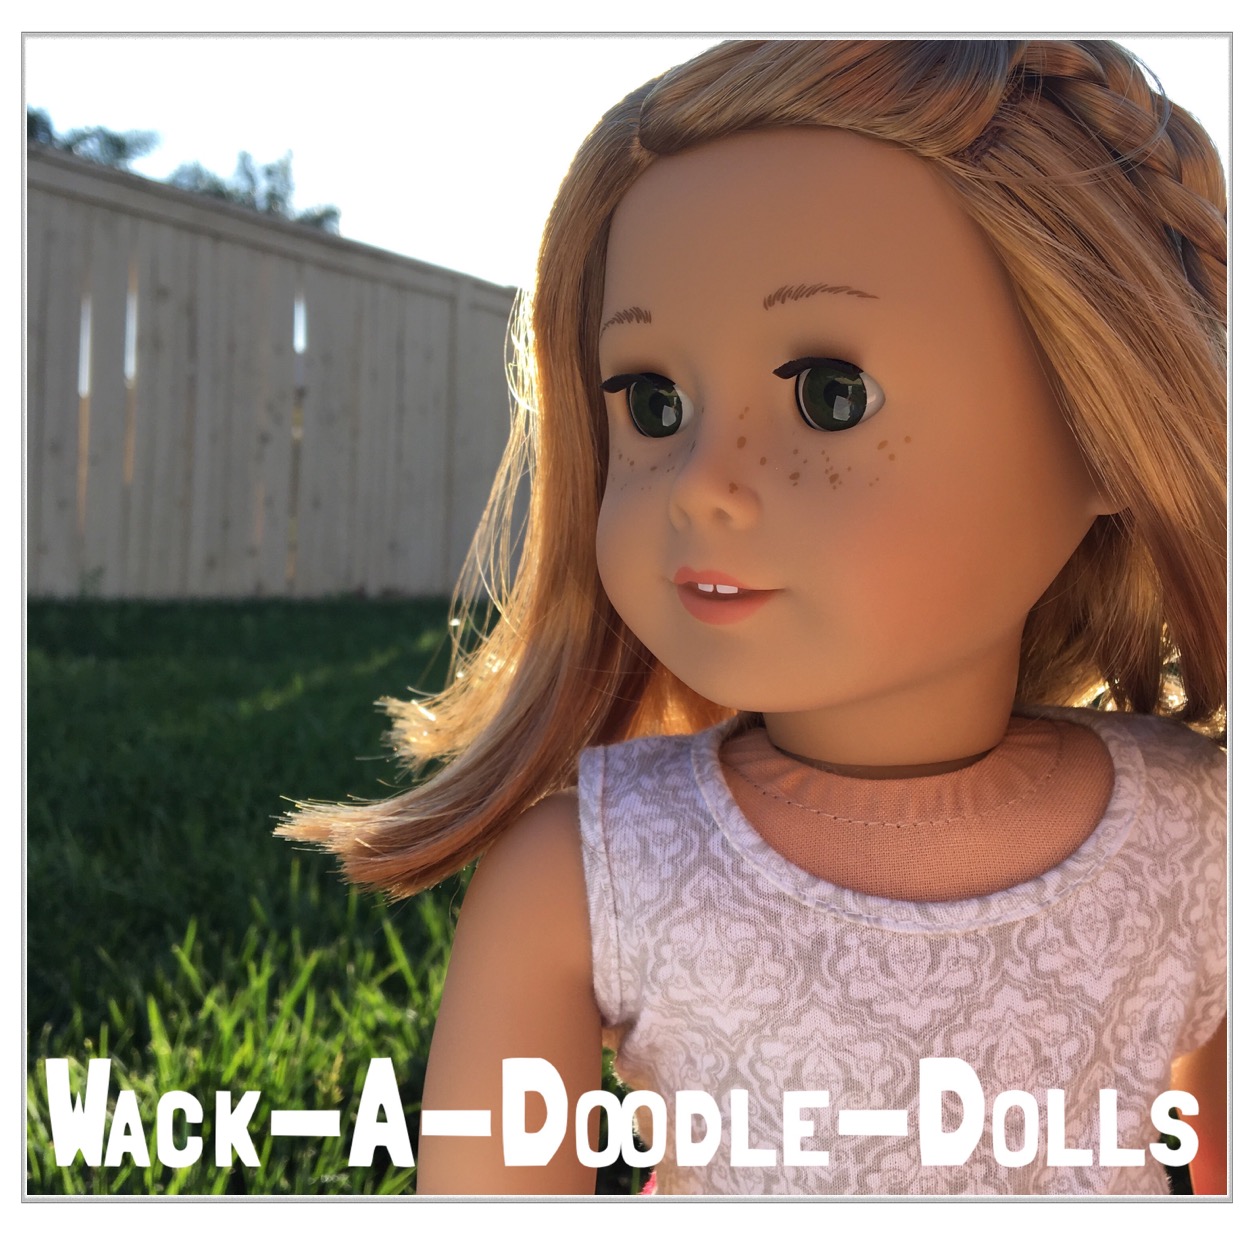 Wack-A-Doodle Dolls Blog